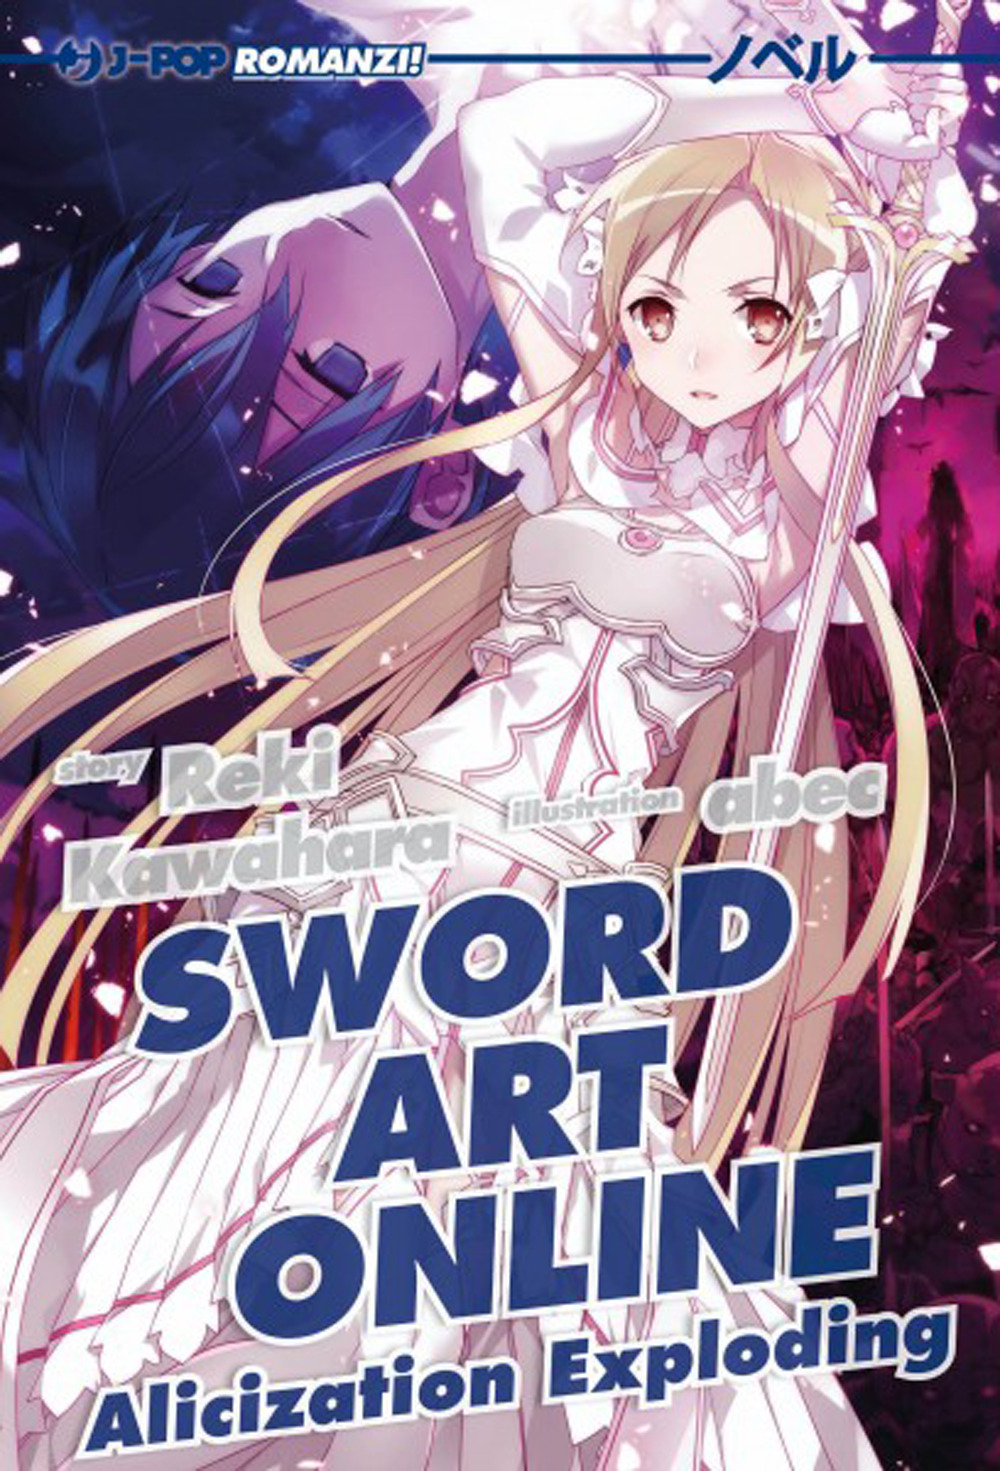 Alicization exploding. Sword art online. Vol. 16